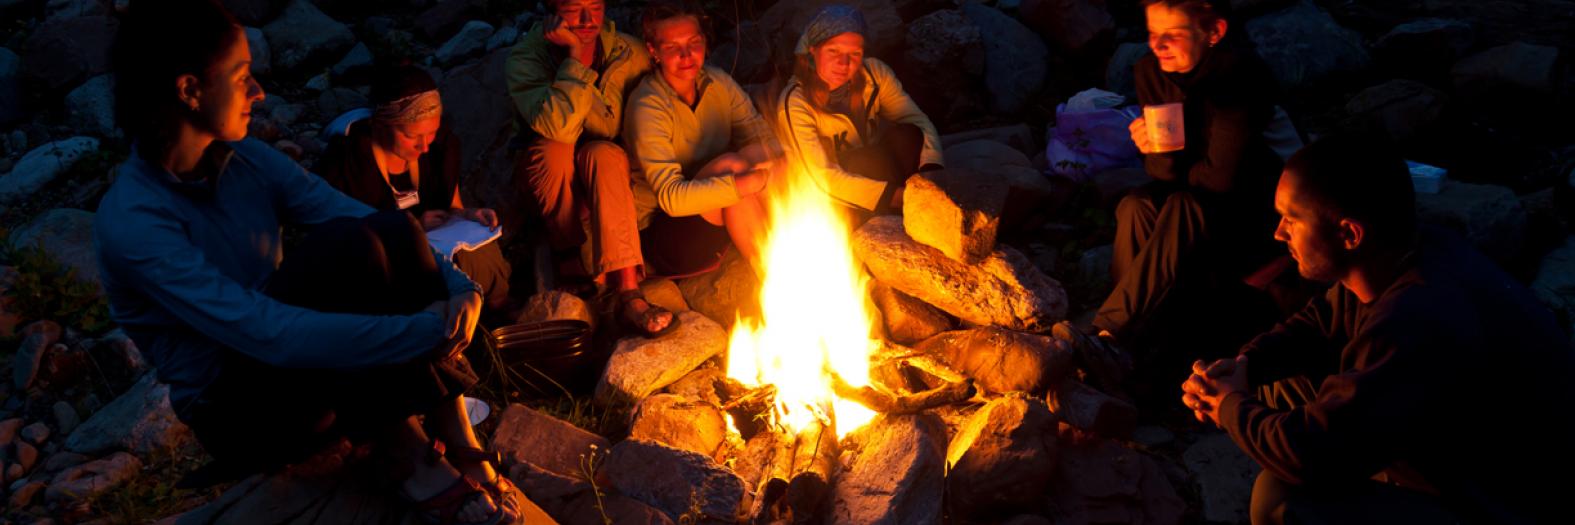 Storytelling around a Campfire